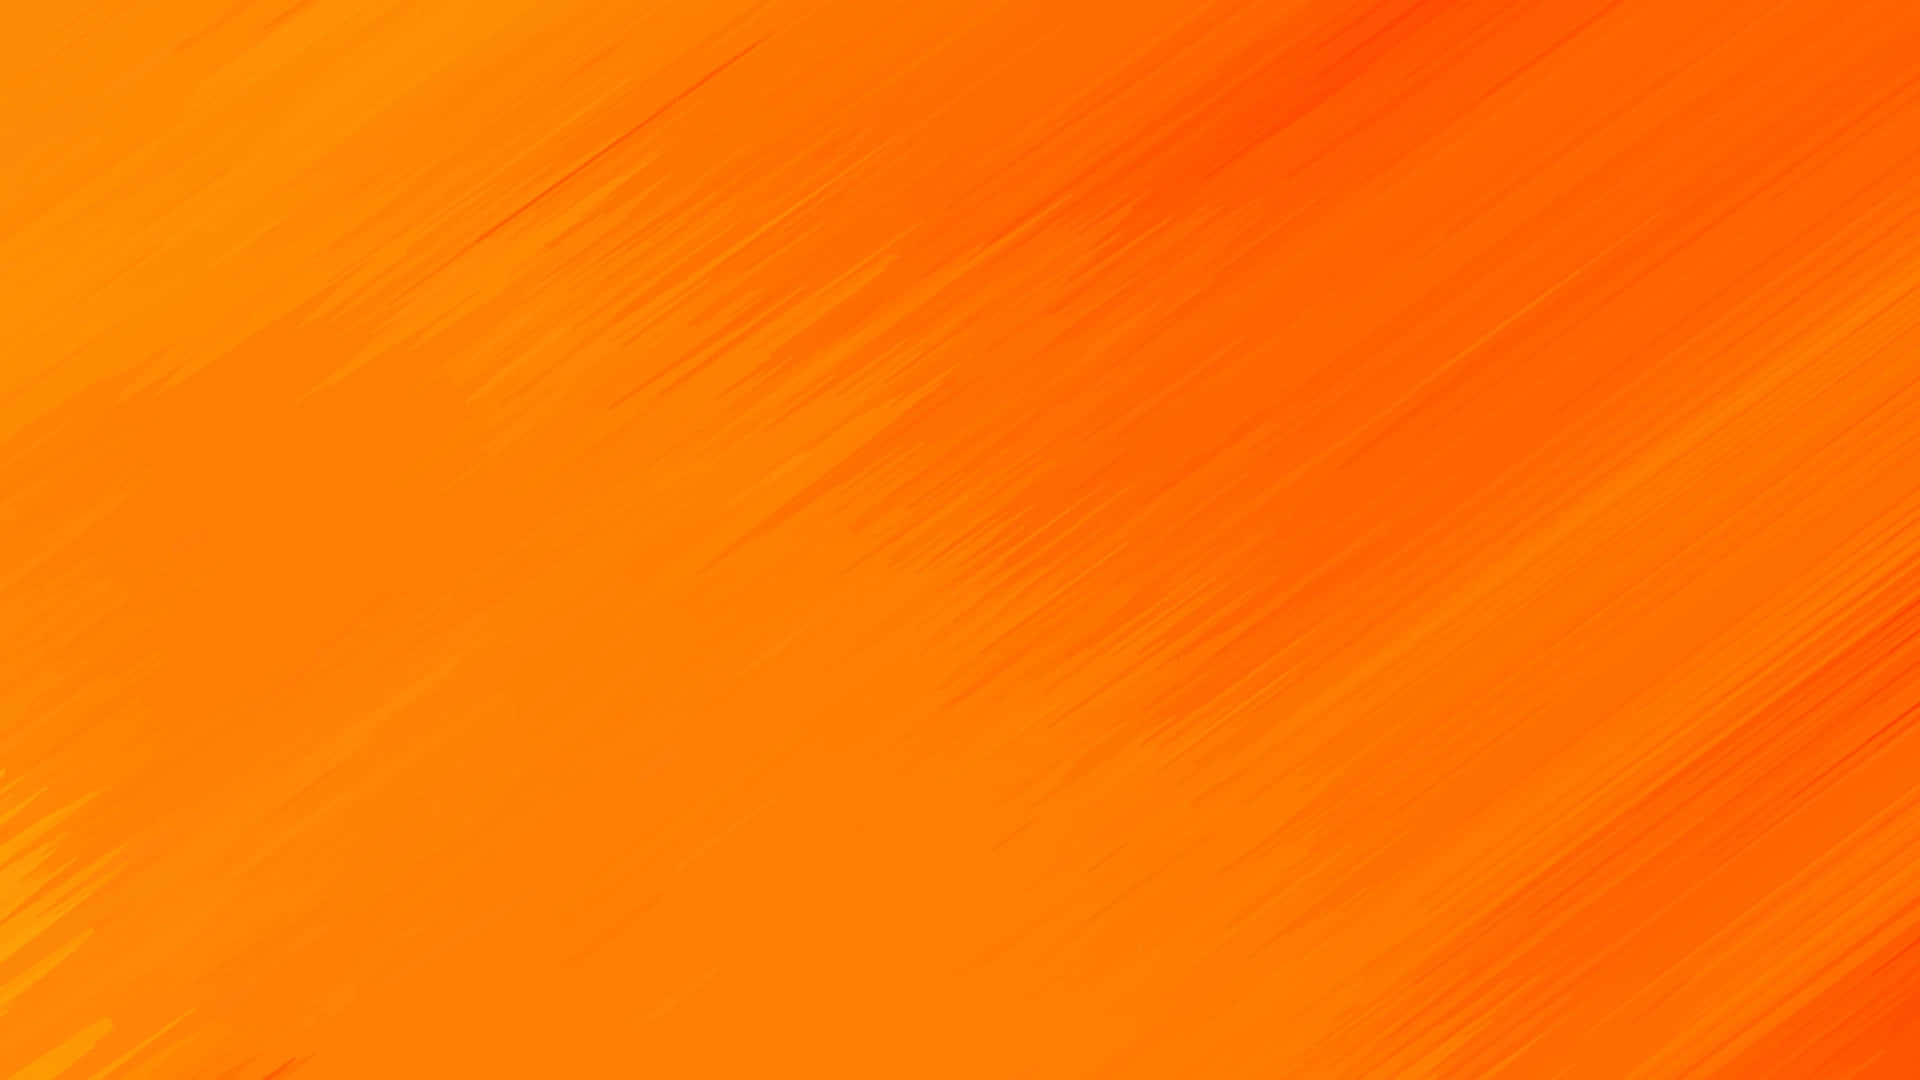 Free Plain Orange Wallpaper Downloads, [100+] Plain Orange Wallpapers for  FREE 